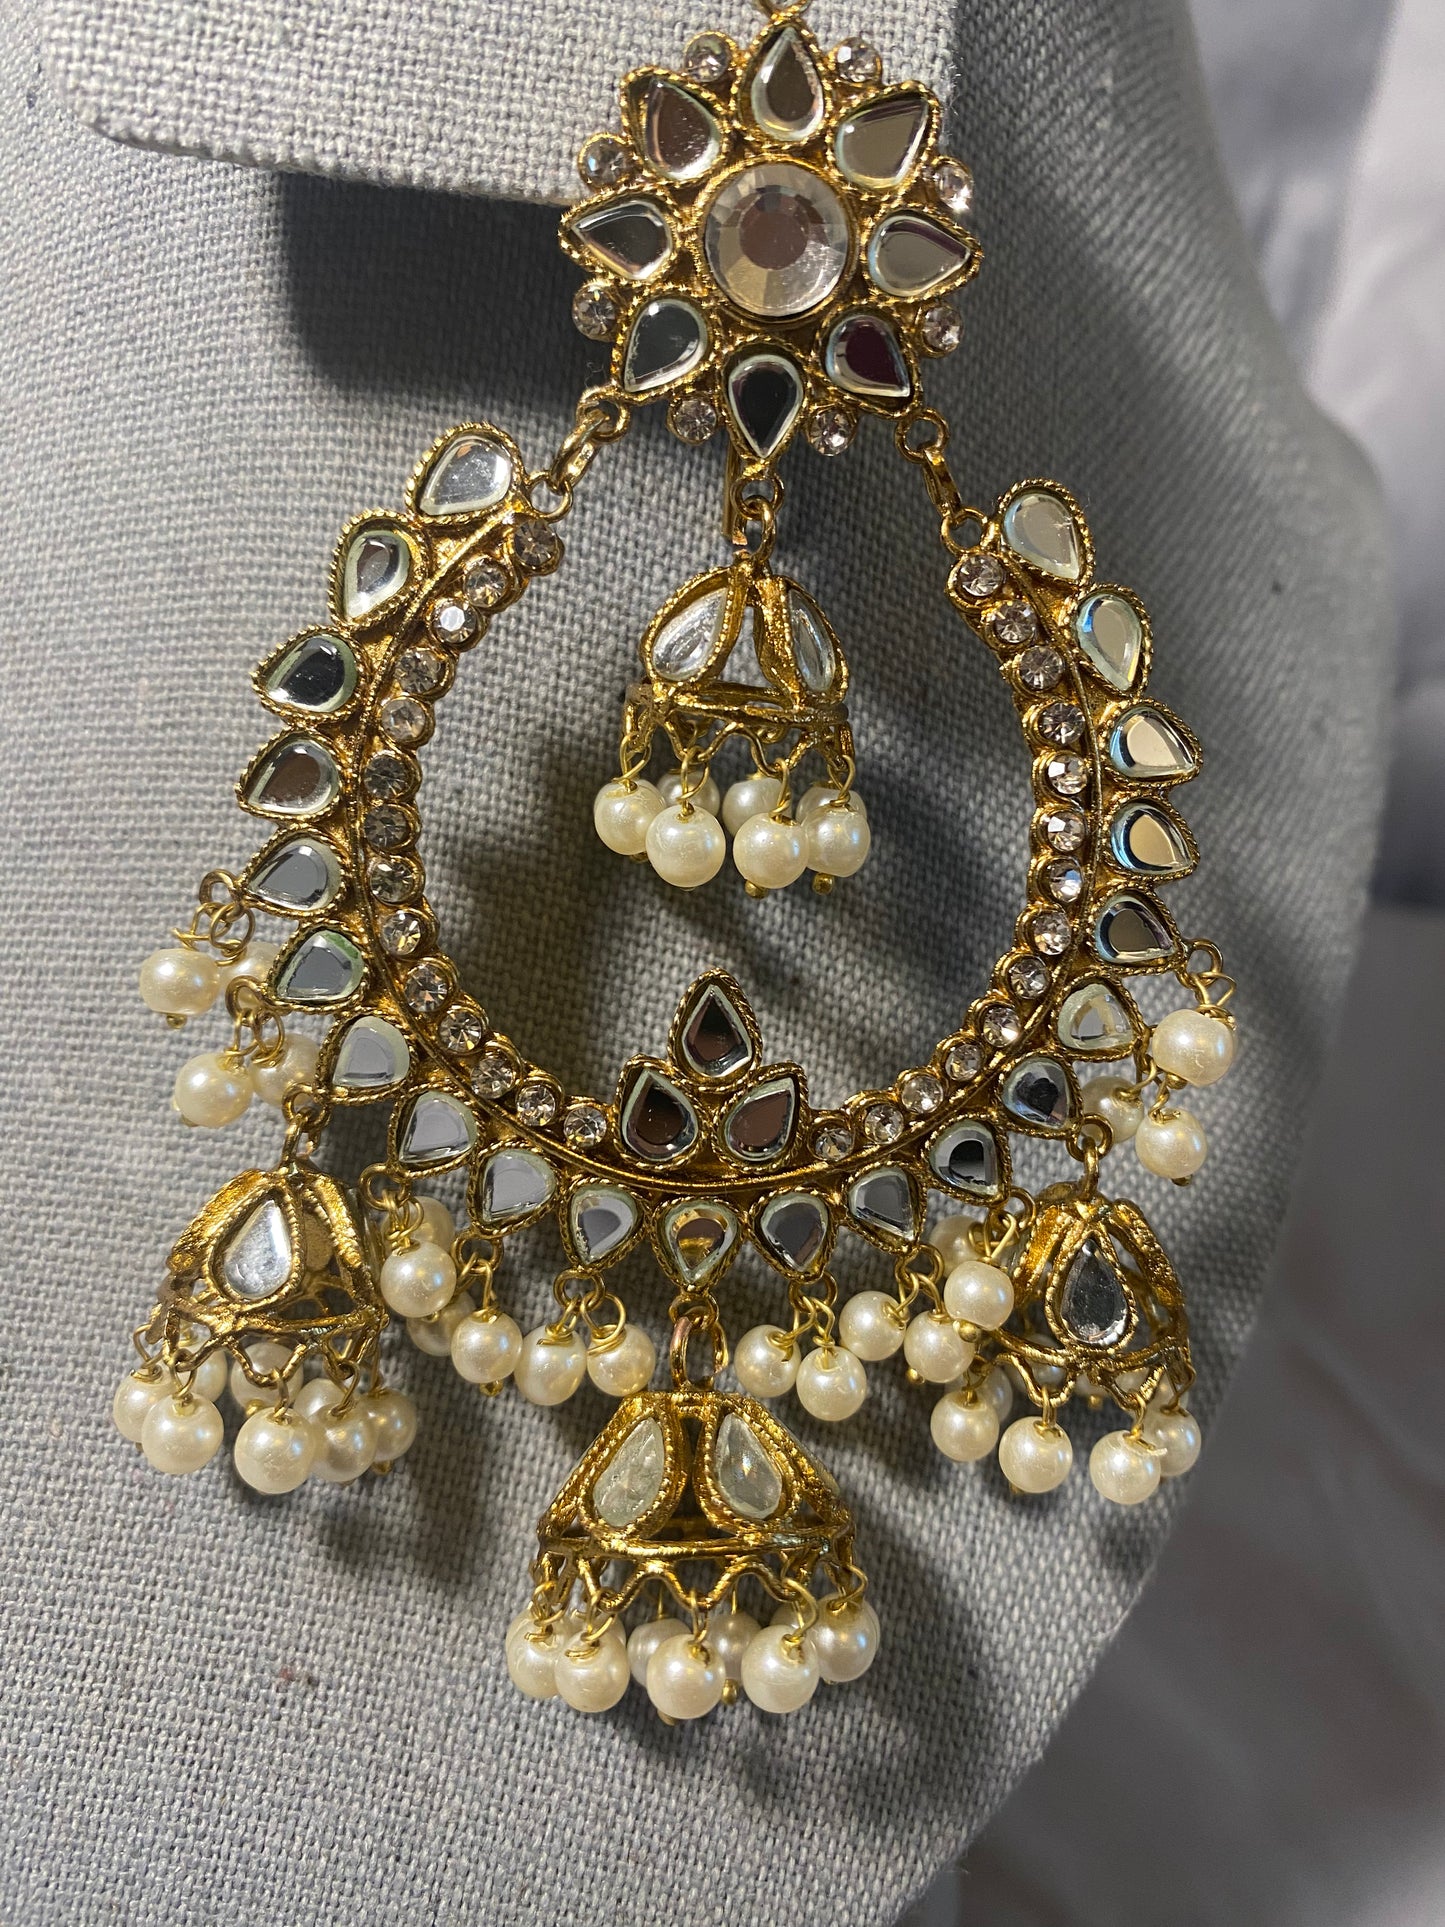 New Jewelry: Long, Mirrored Kundan Chaand Bali Earrings